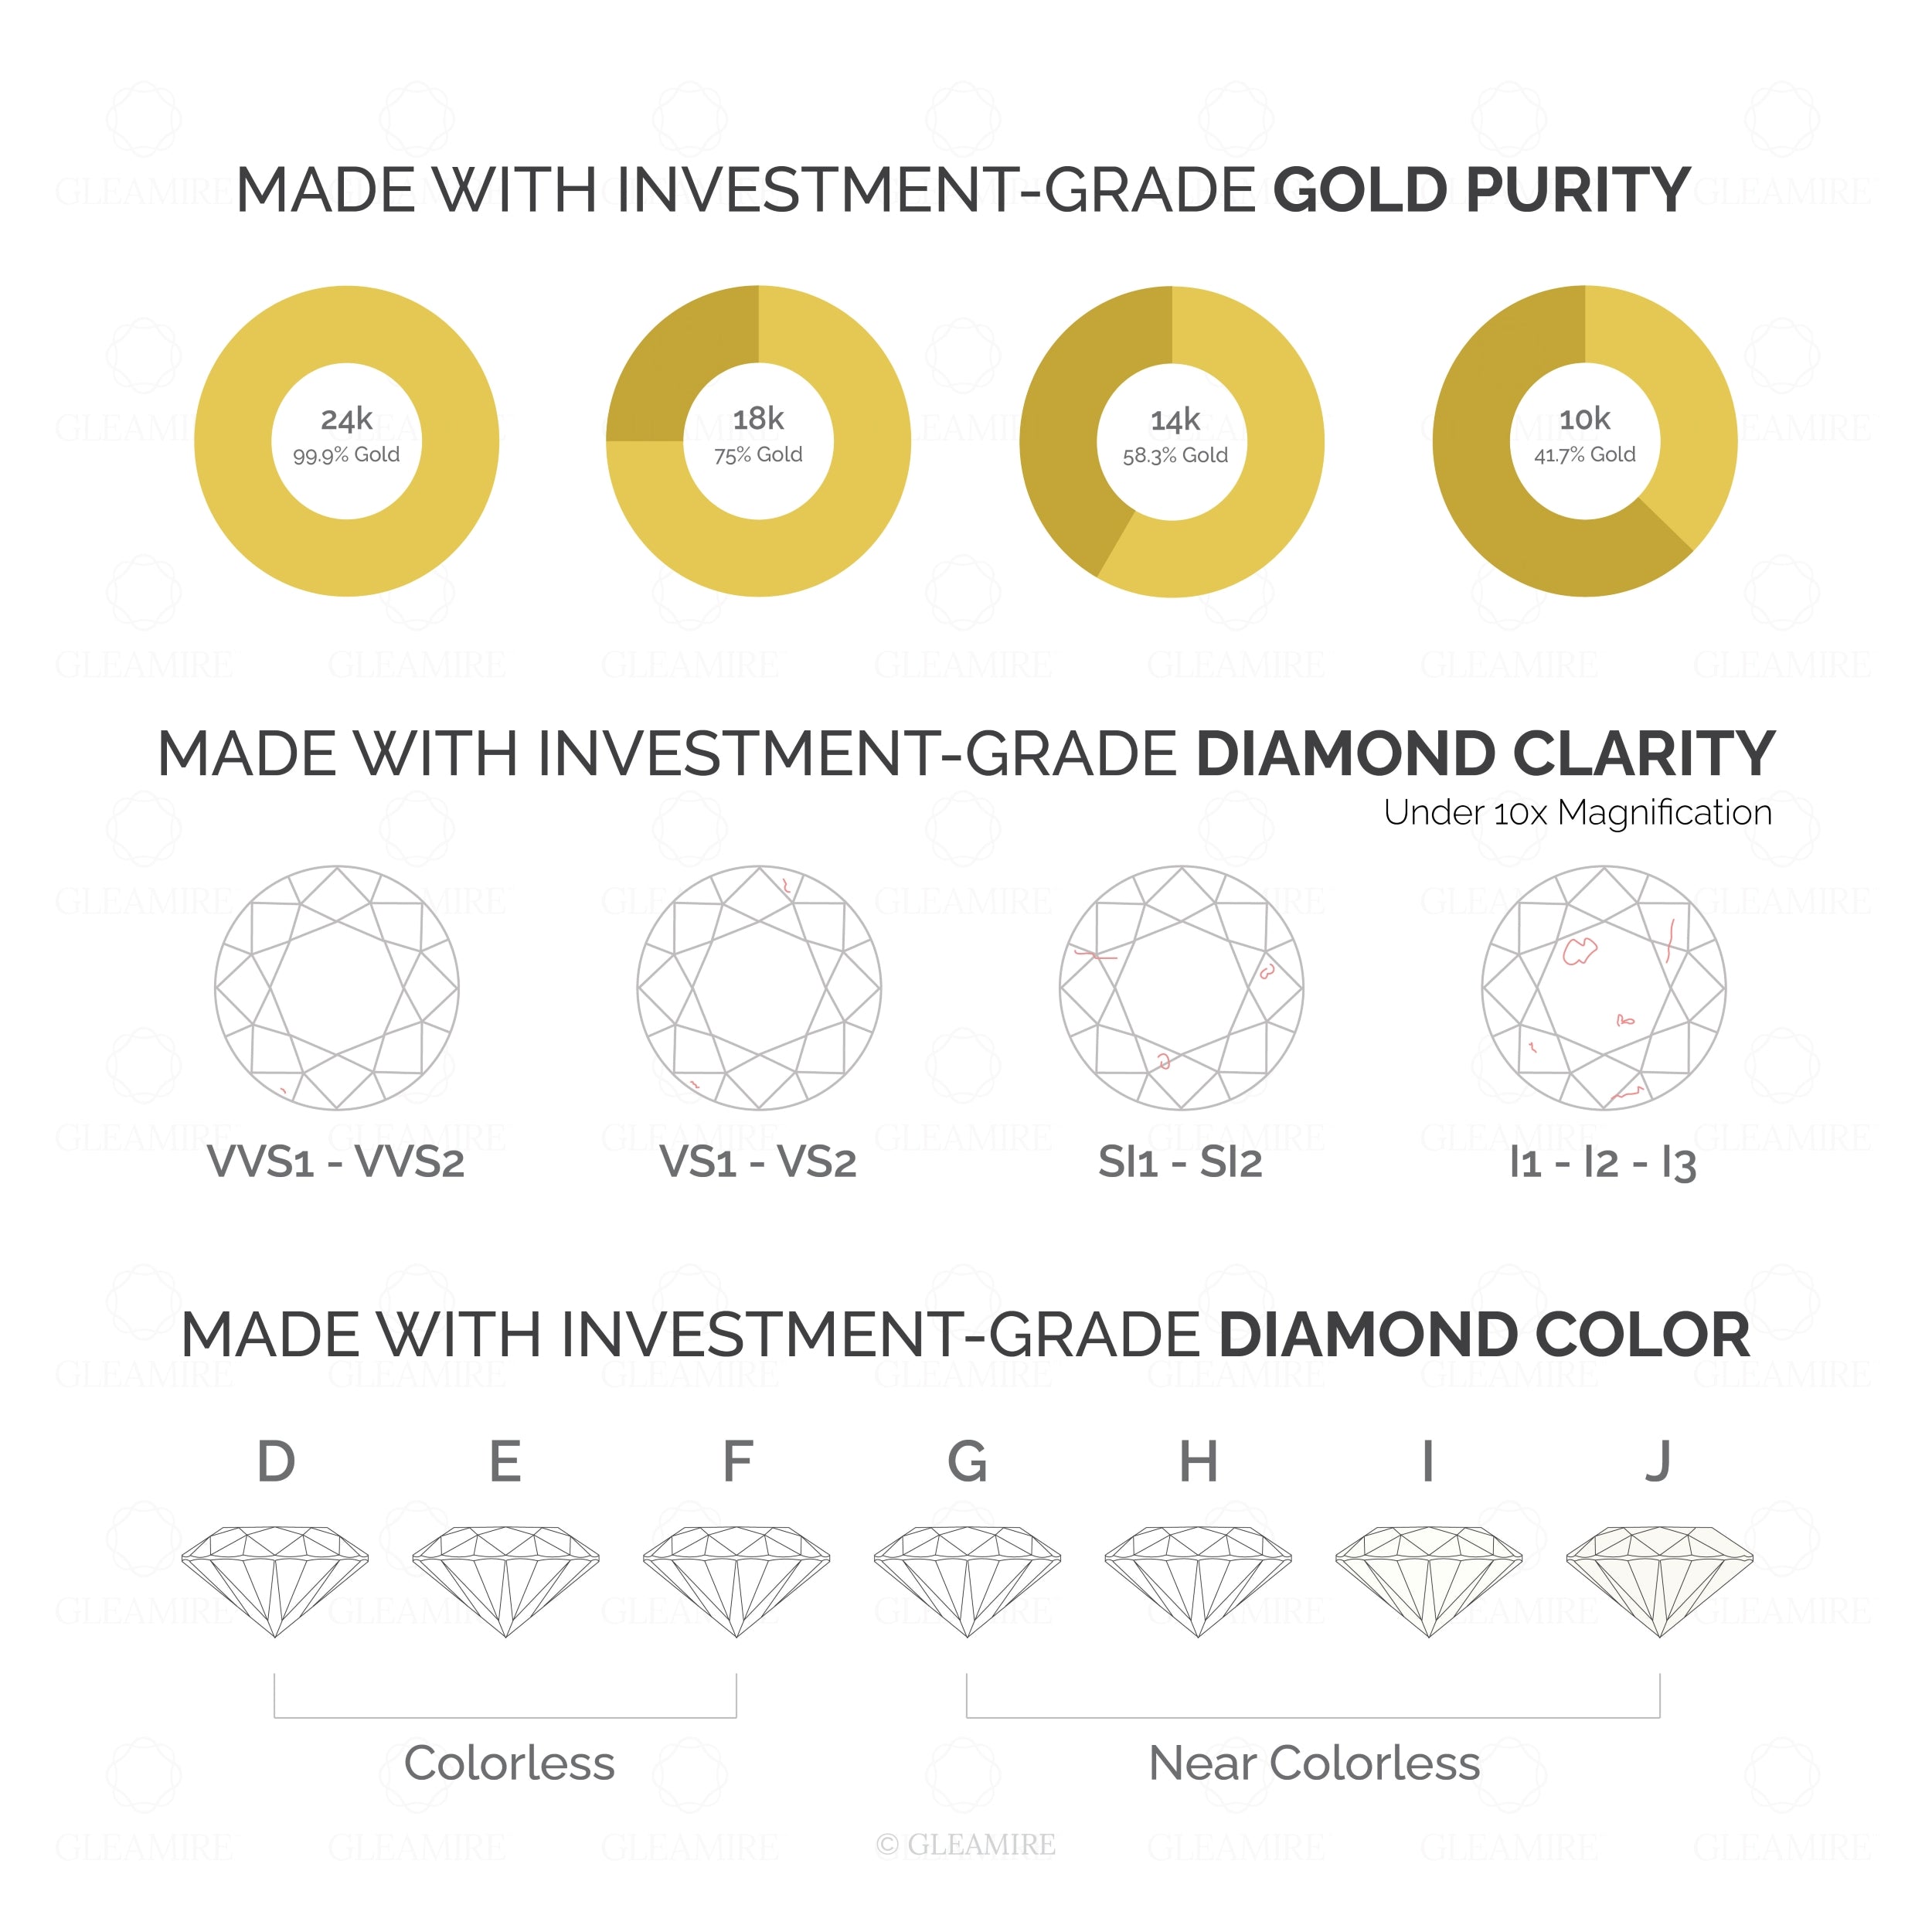 Certified 14K Gold 1.1ct Natural Diamond F-I1 3mm Illusion Plates Tennis White Bracelet